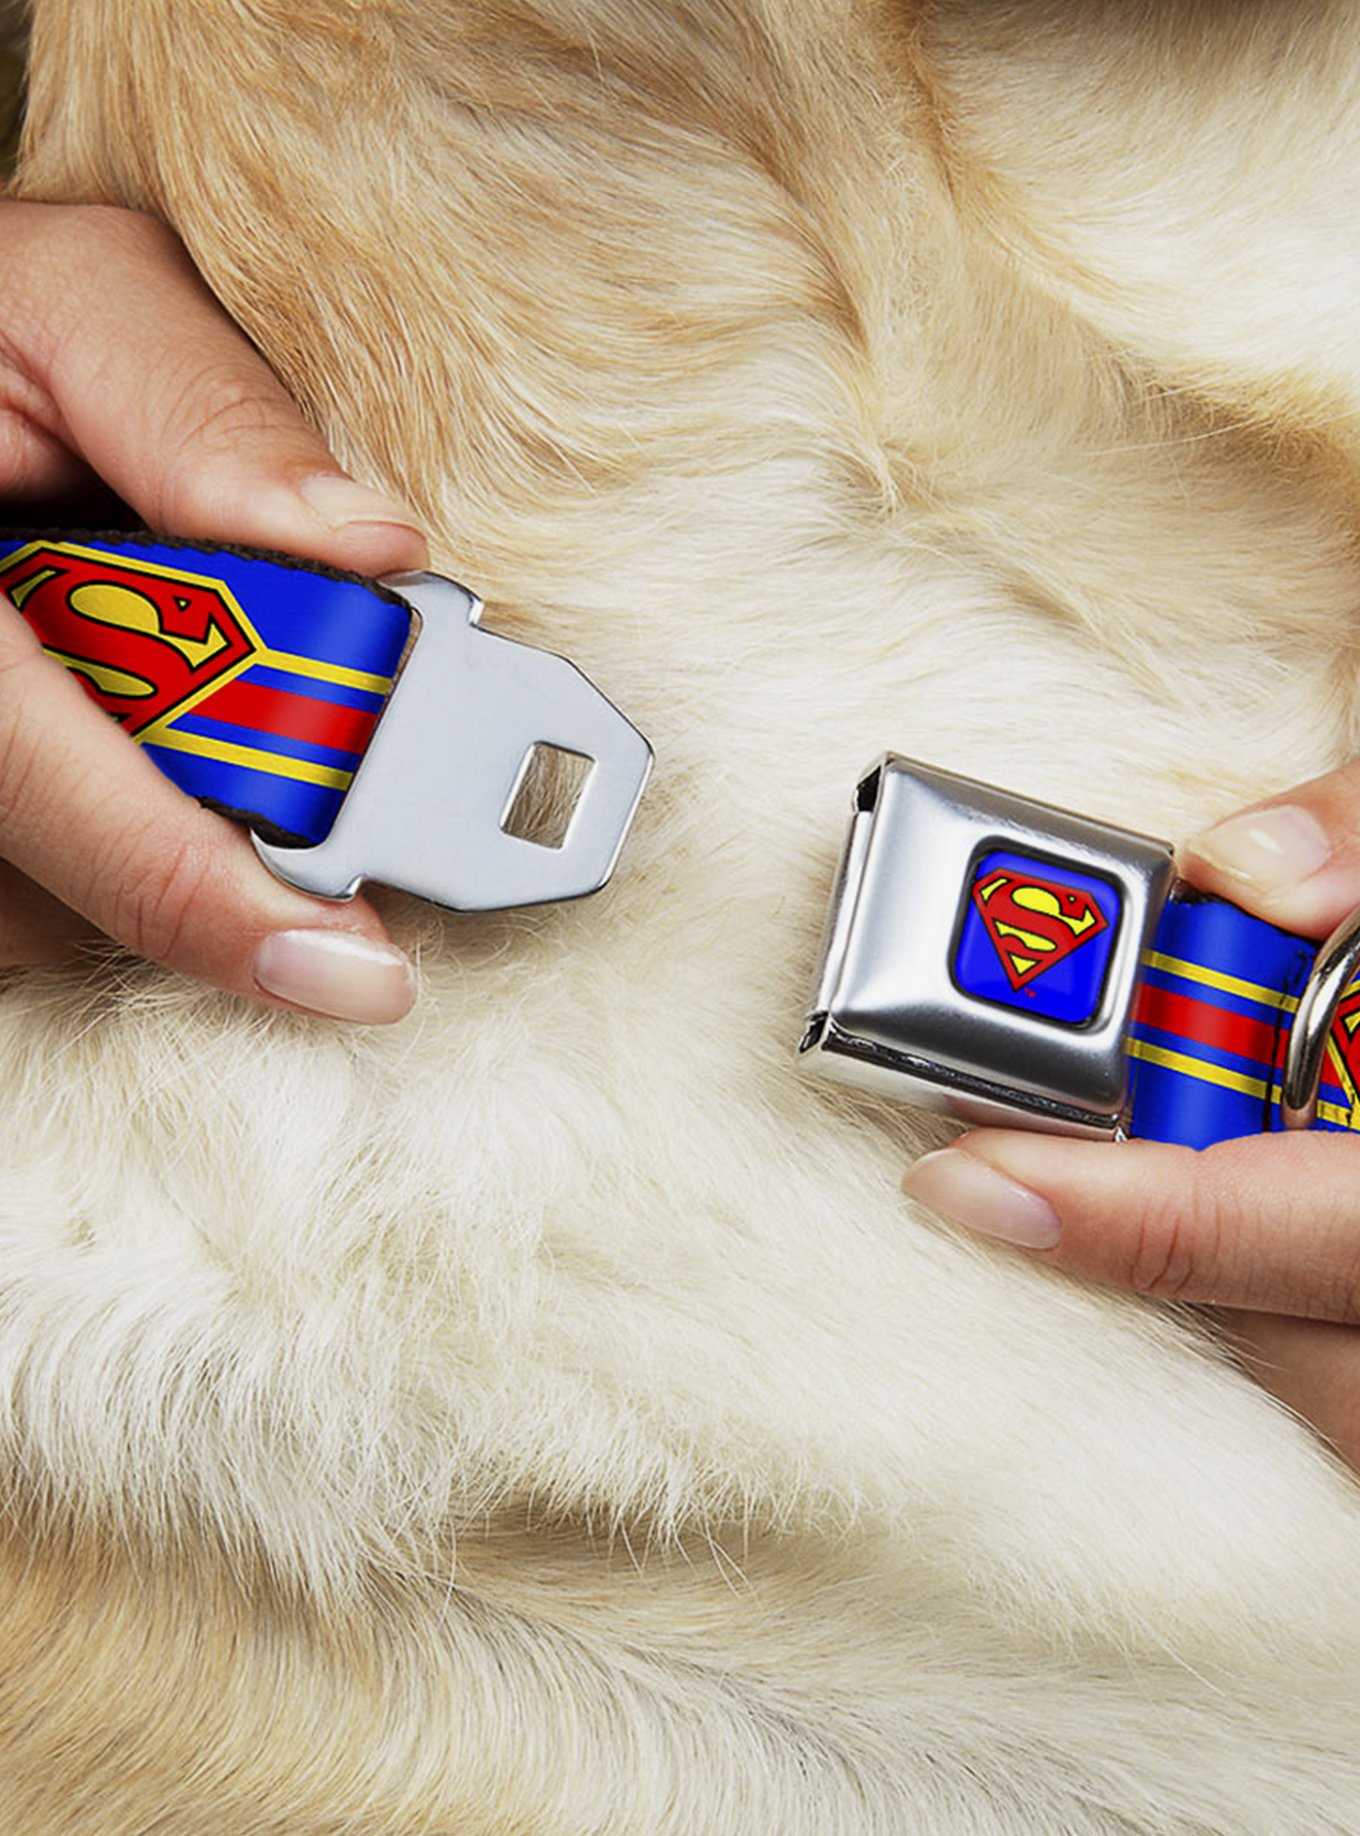 DC Comics Justice League Superman Shield Stripe Blue Yellow Red Seatbelt Buckle Dog Collar, , hi-res